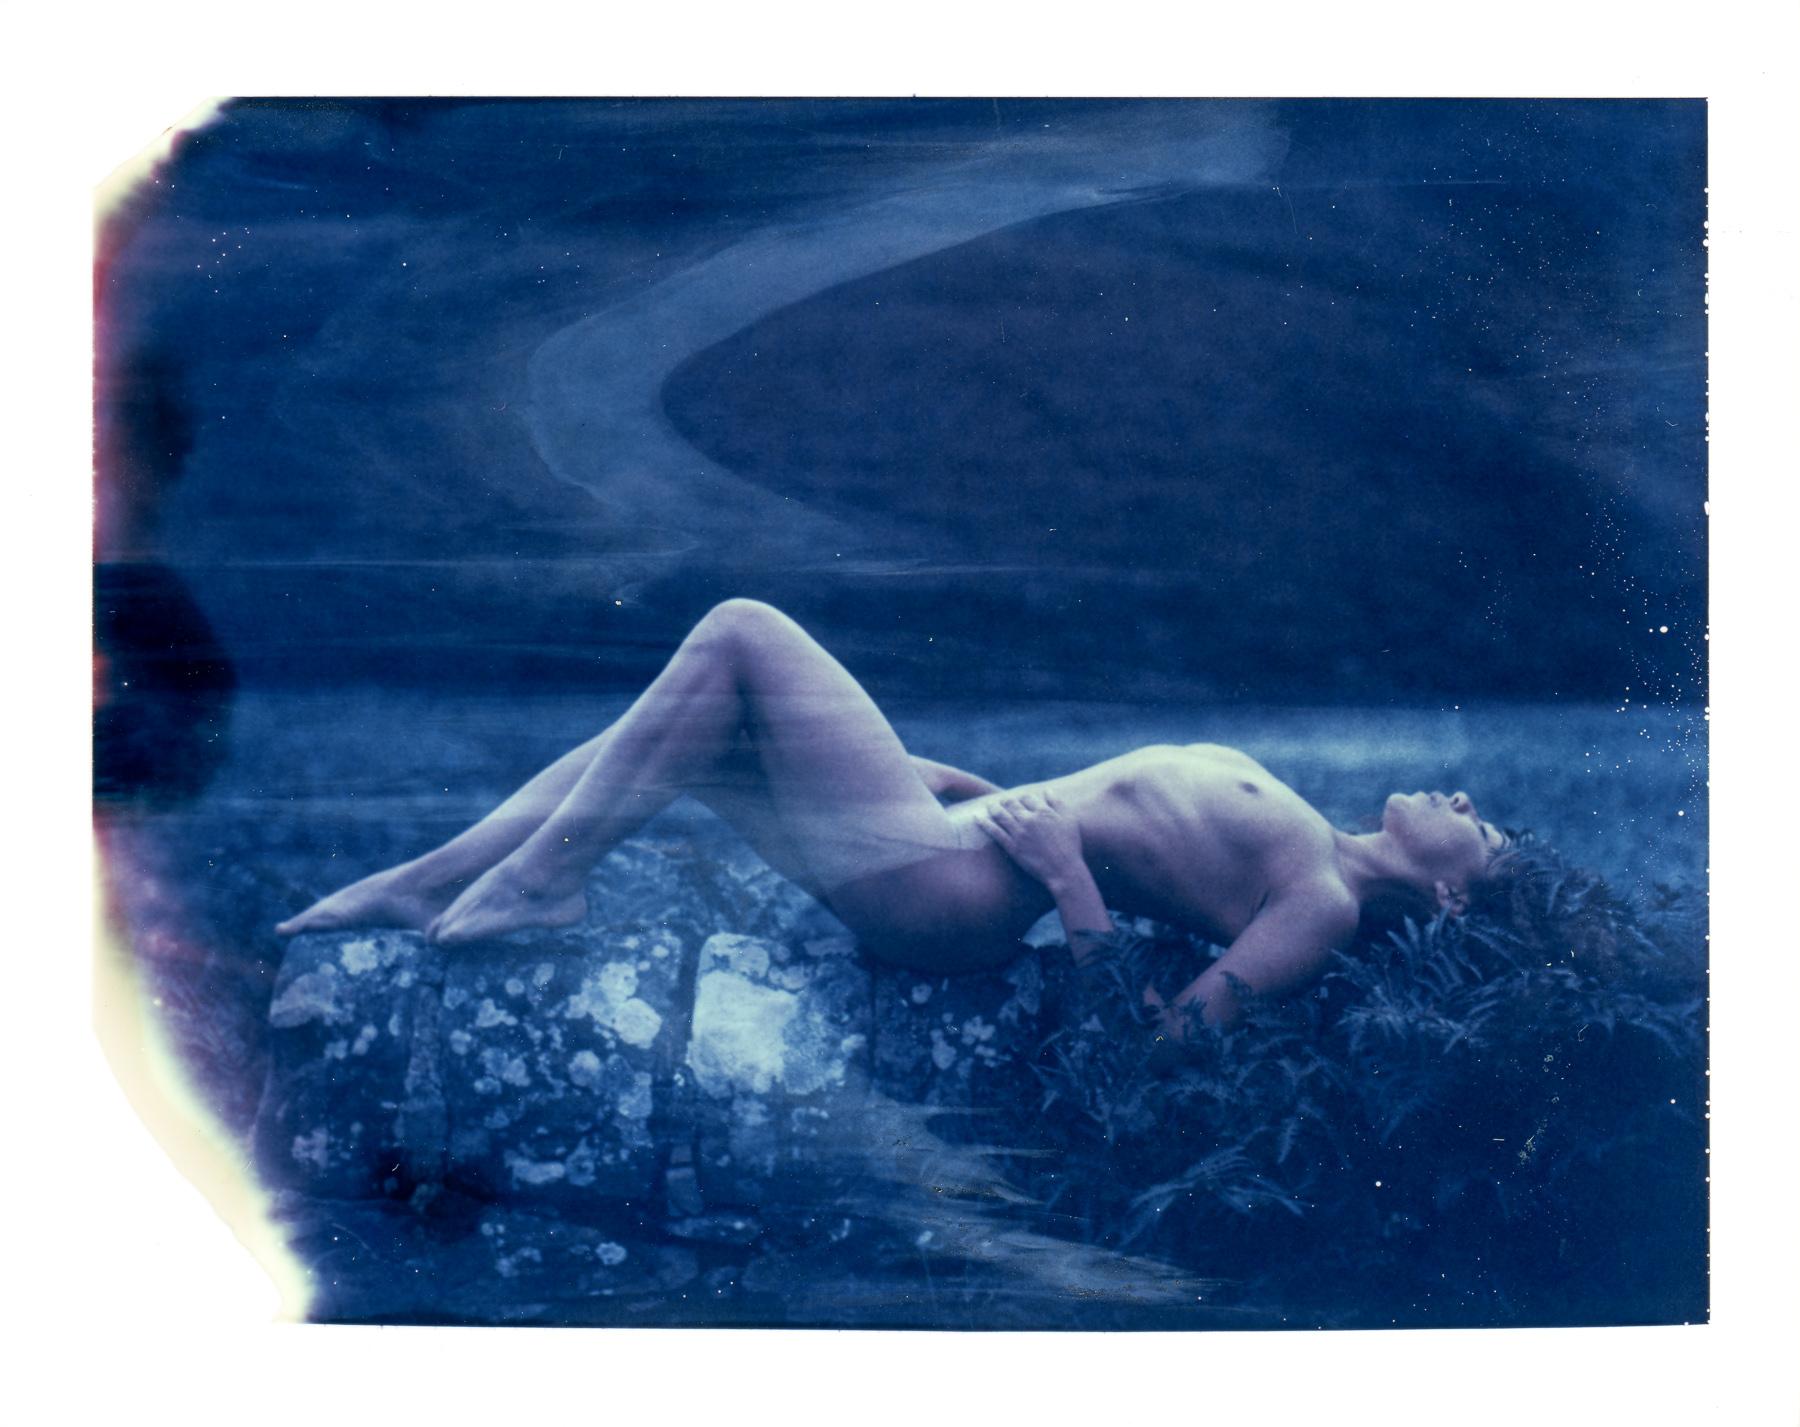 Wandblume des 21. Jahrhunderts, Polaroid, Aktfotografie, Blau